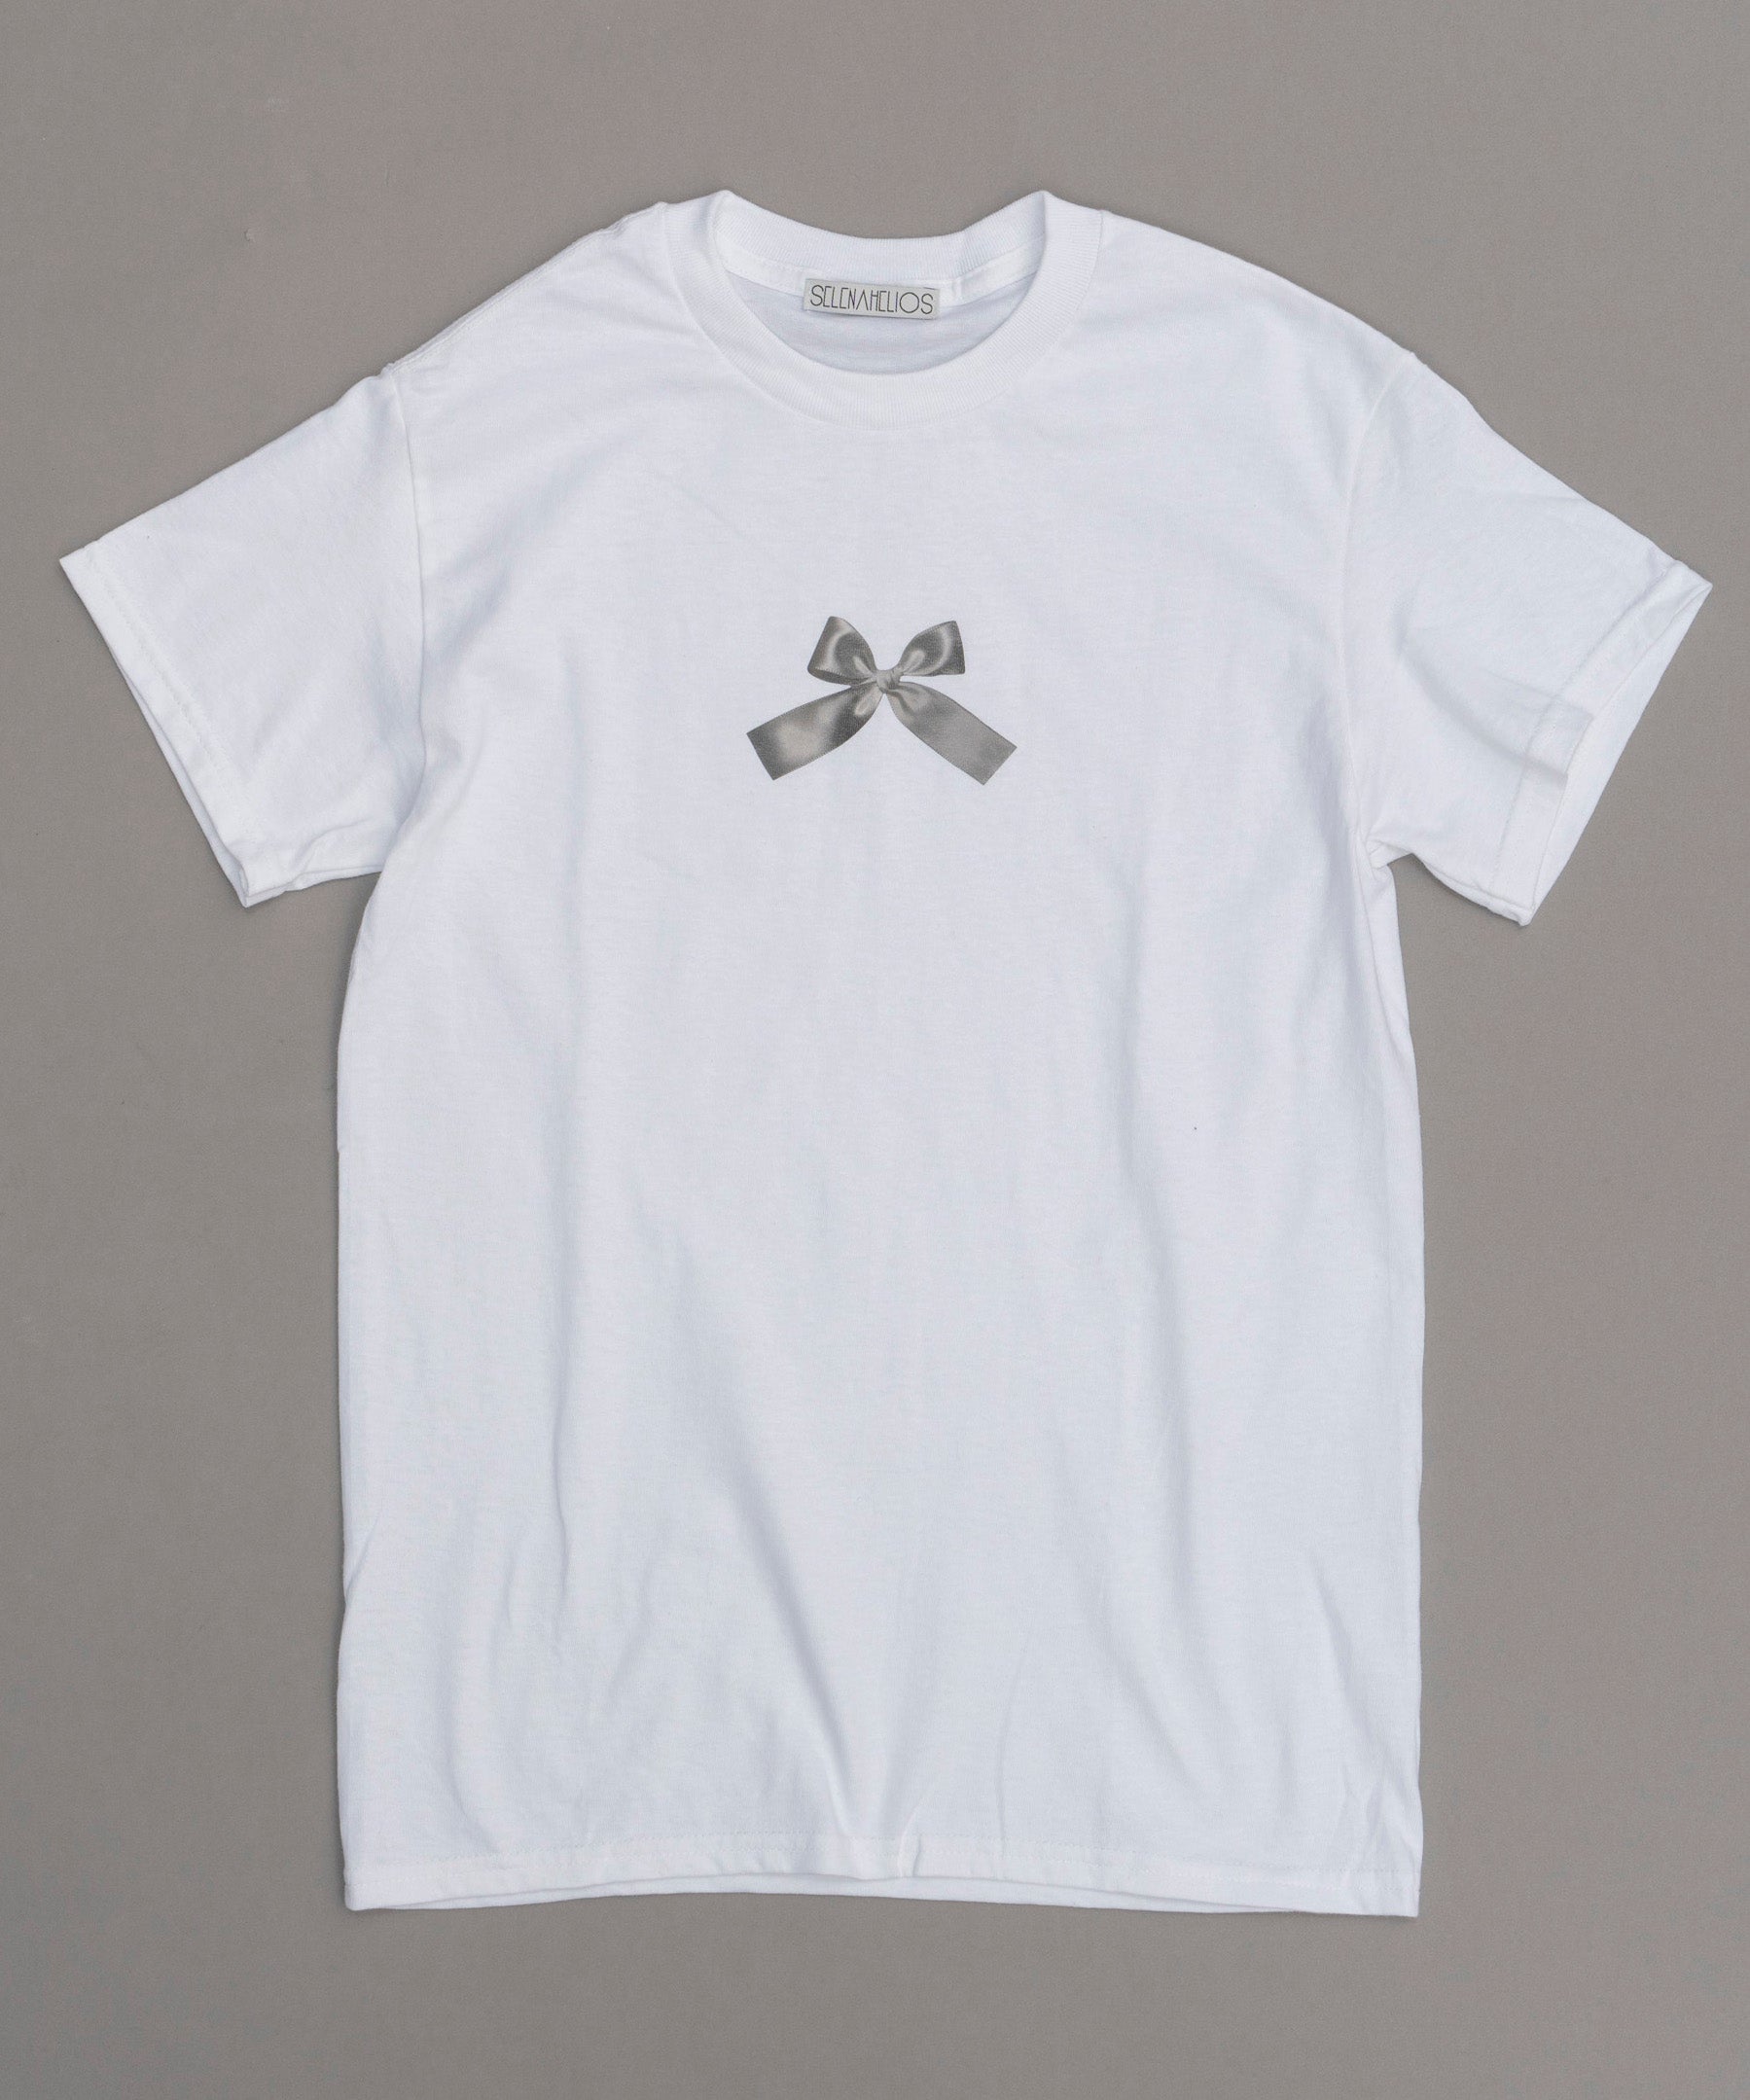 【PRE-ORDER】【SELENAHELIOS×MAISON SPECIAL】Ribbon T-shirt